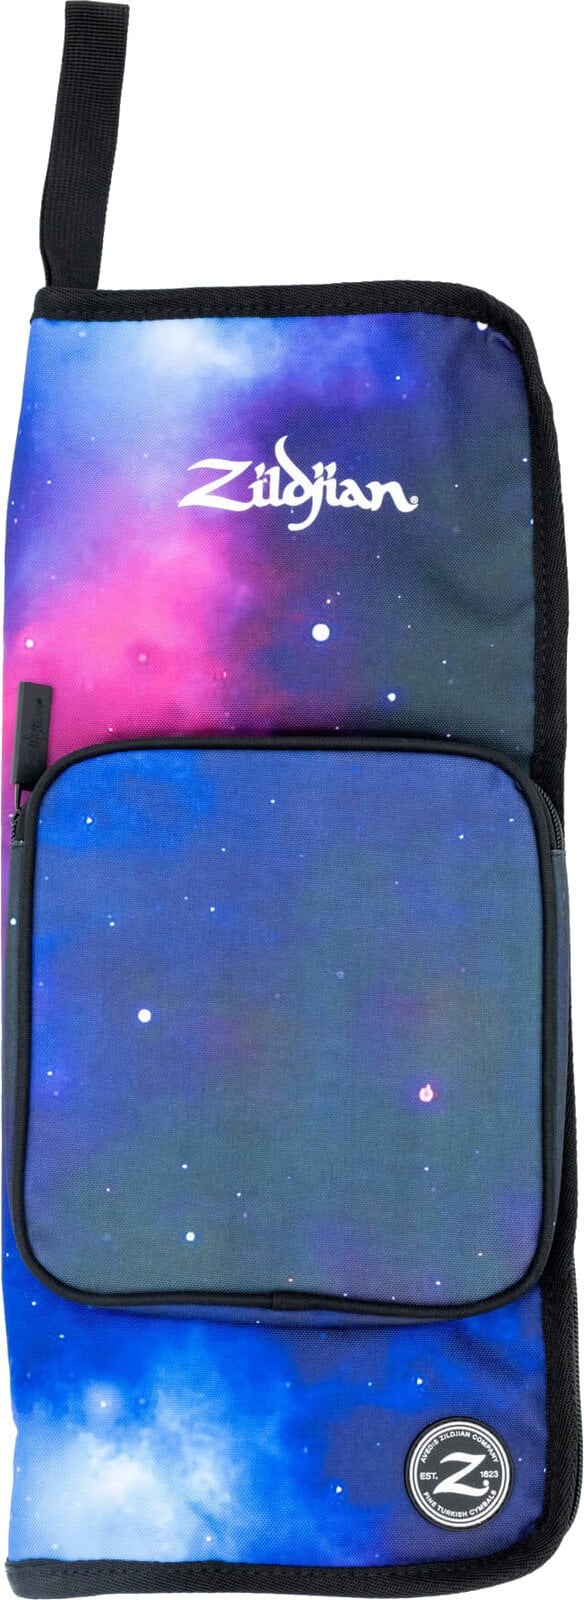 Puzdro na paličky Zildjian Student Stick Bag Purple Galaxy Puzdro na paličky